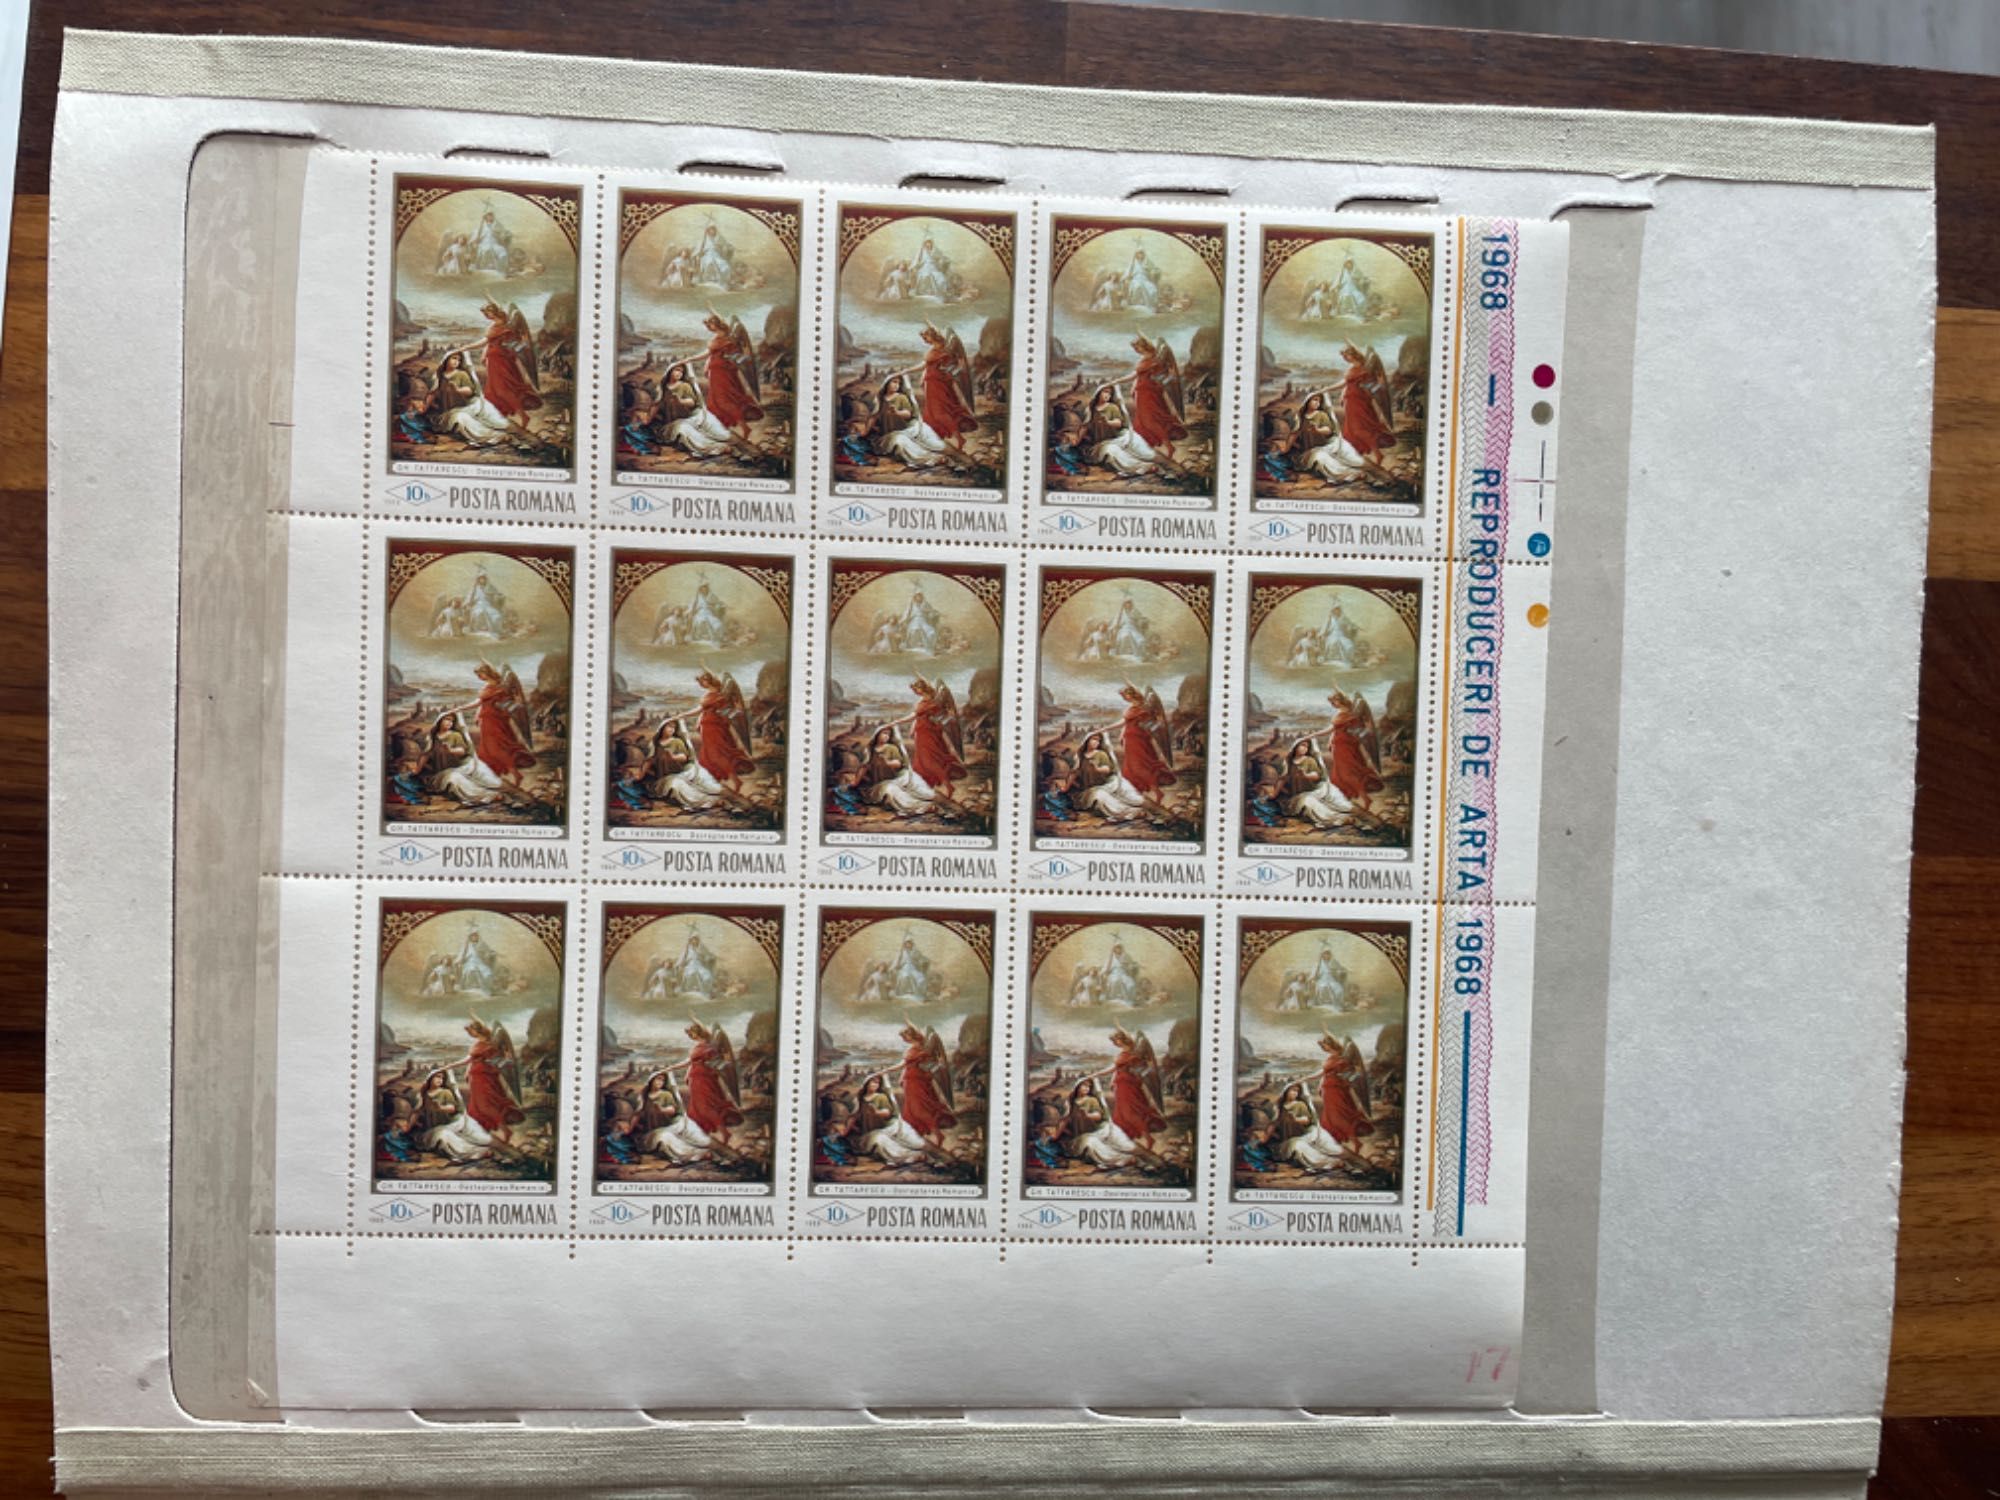 Colectie de peste 8000 de timbre rare in conditie exceptionala, mint